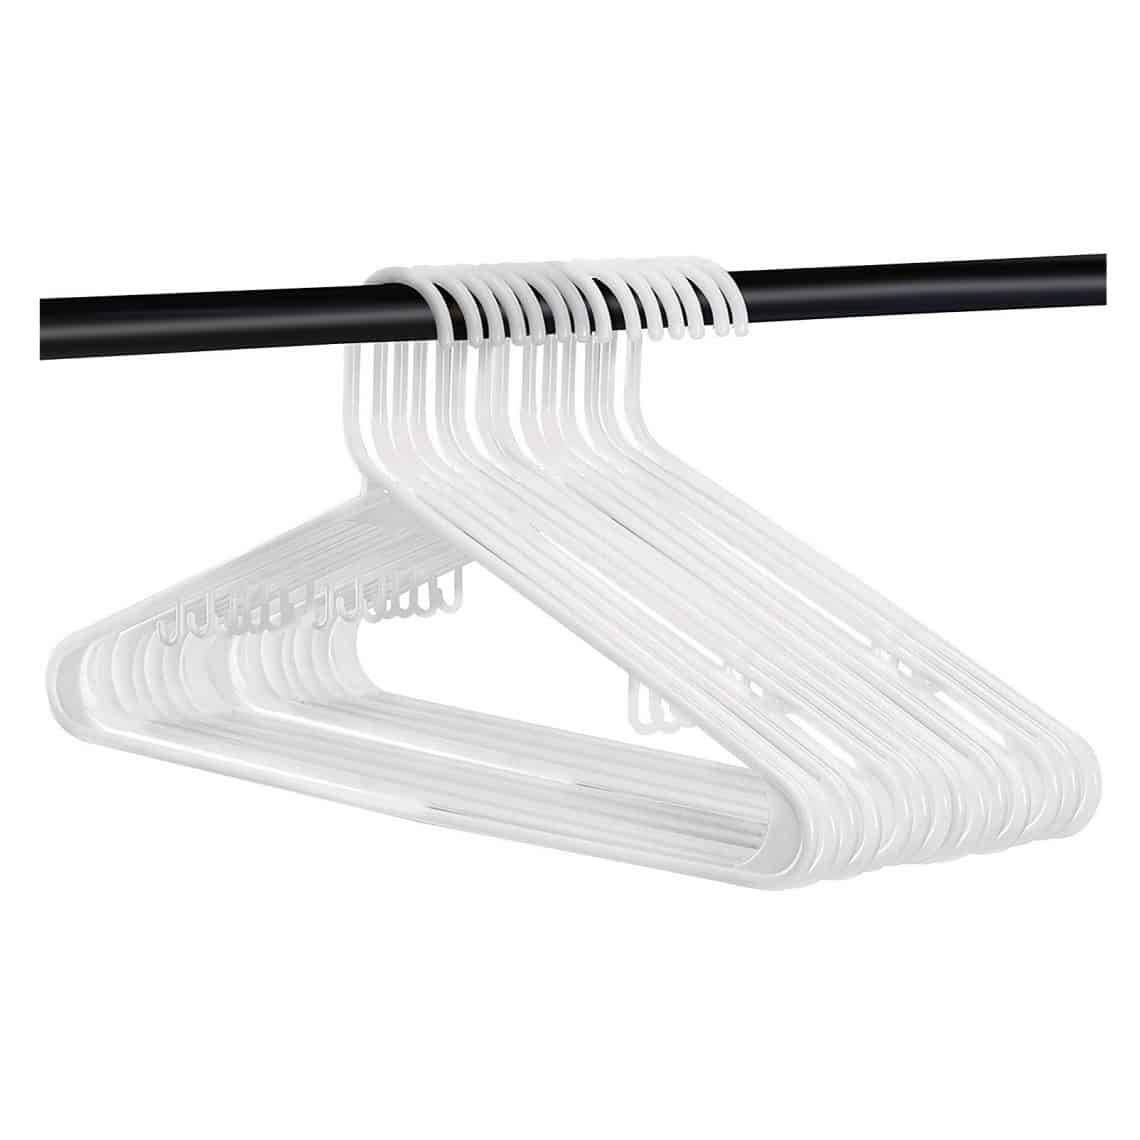 Efficient Closet Organization with Plastic Clothes Hangers